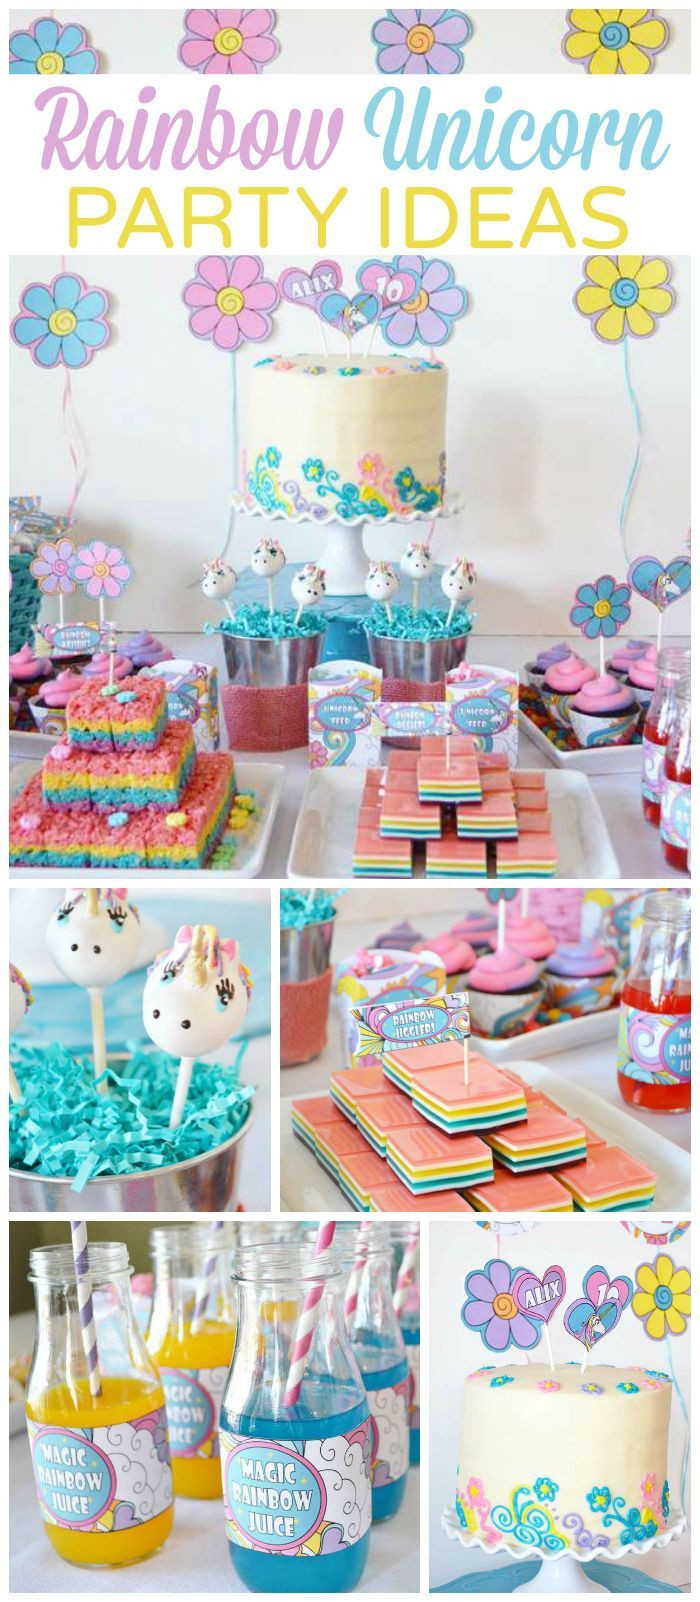 Unicorn And Rainbow Birthday Party Ideas
 This rainbow and unicorn party is so girly and magical